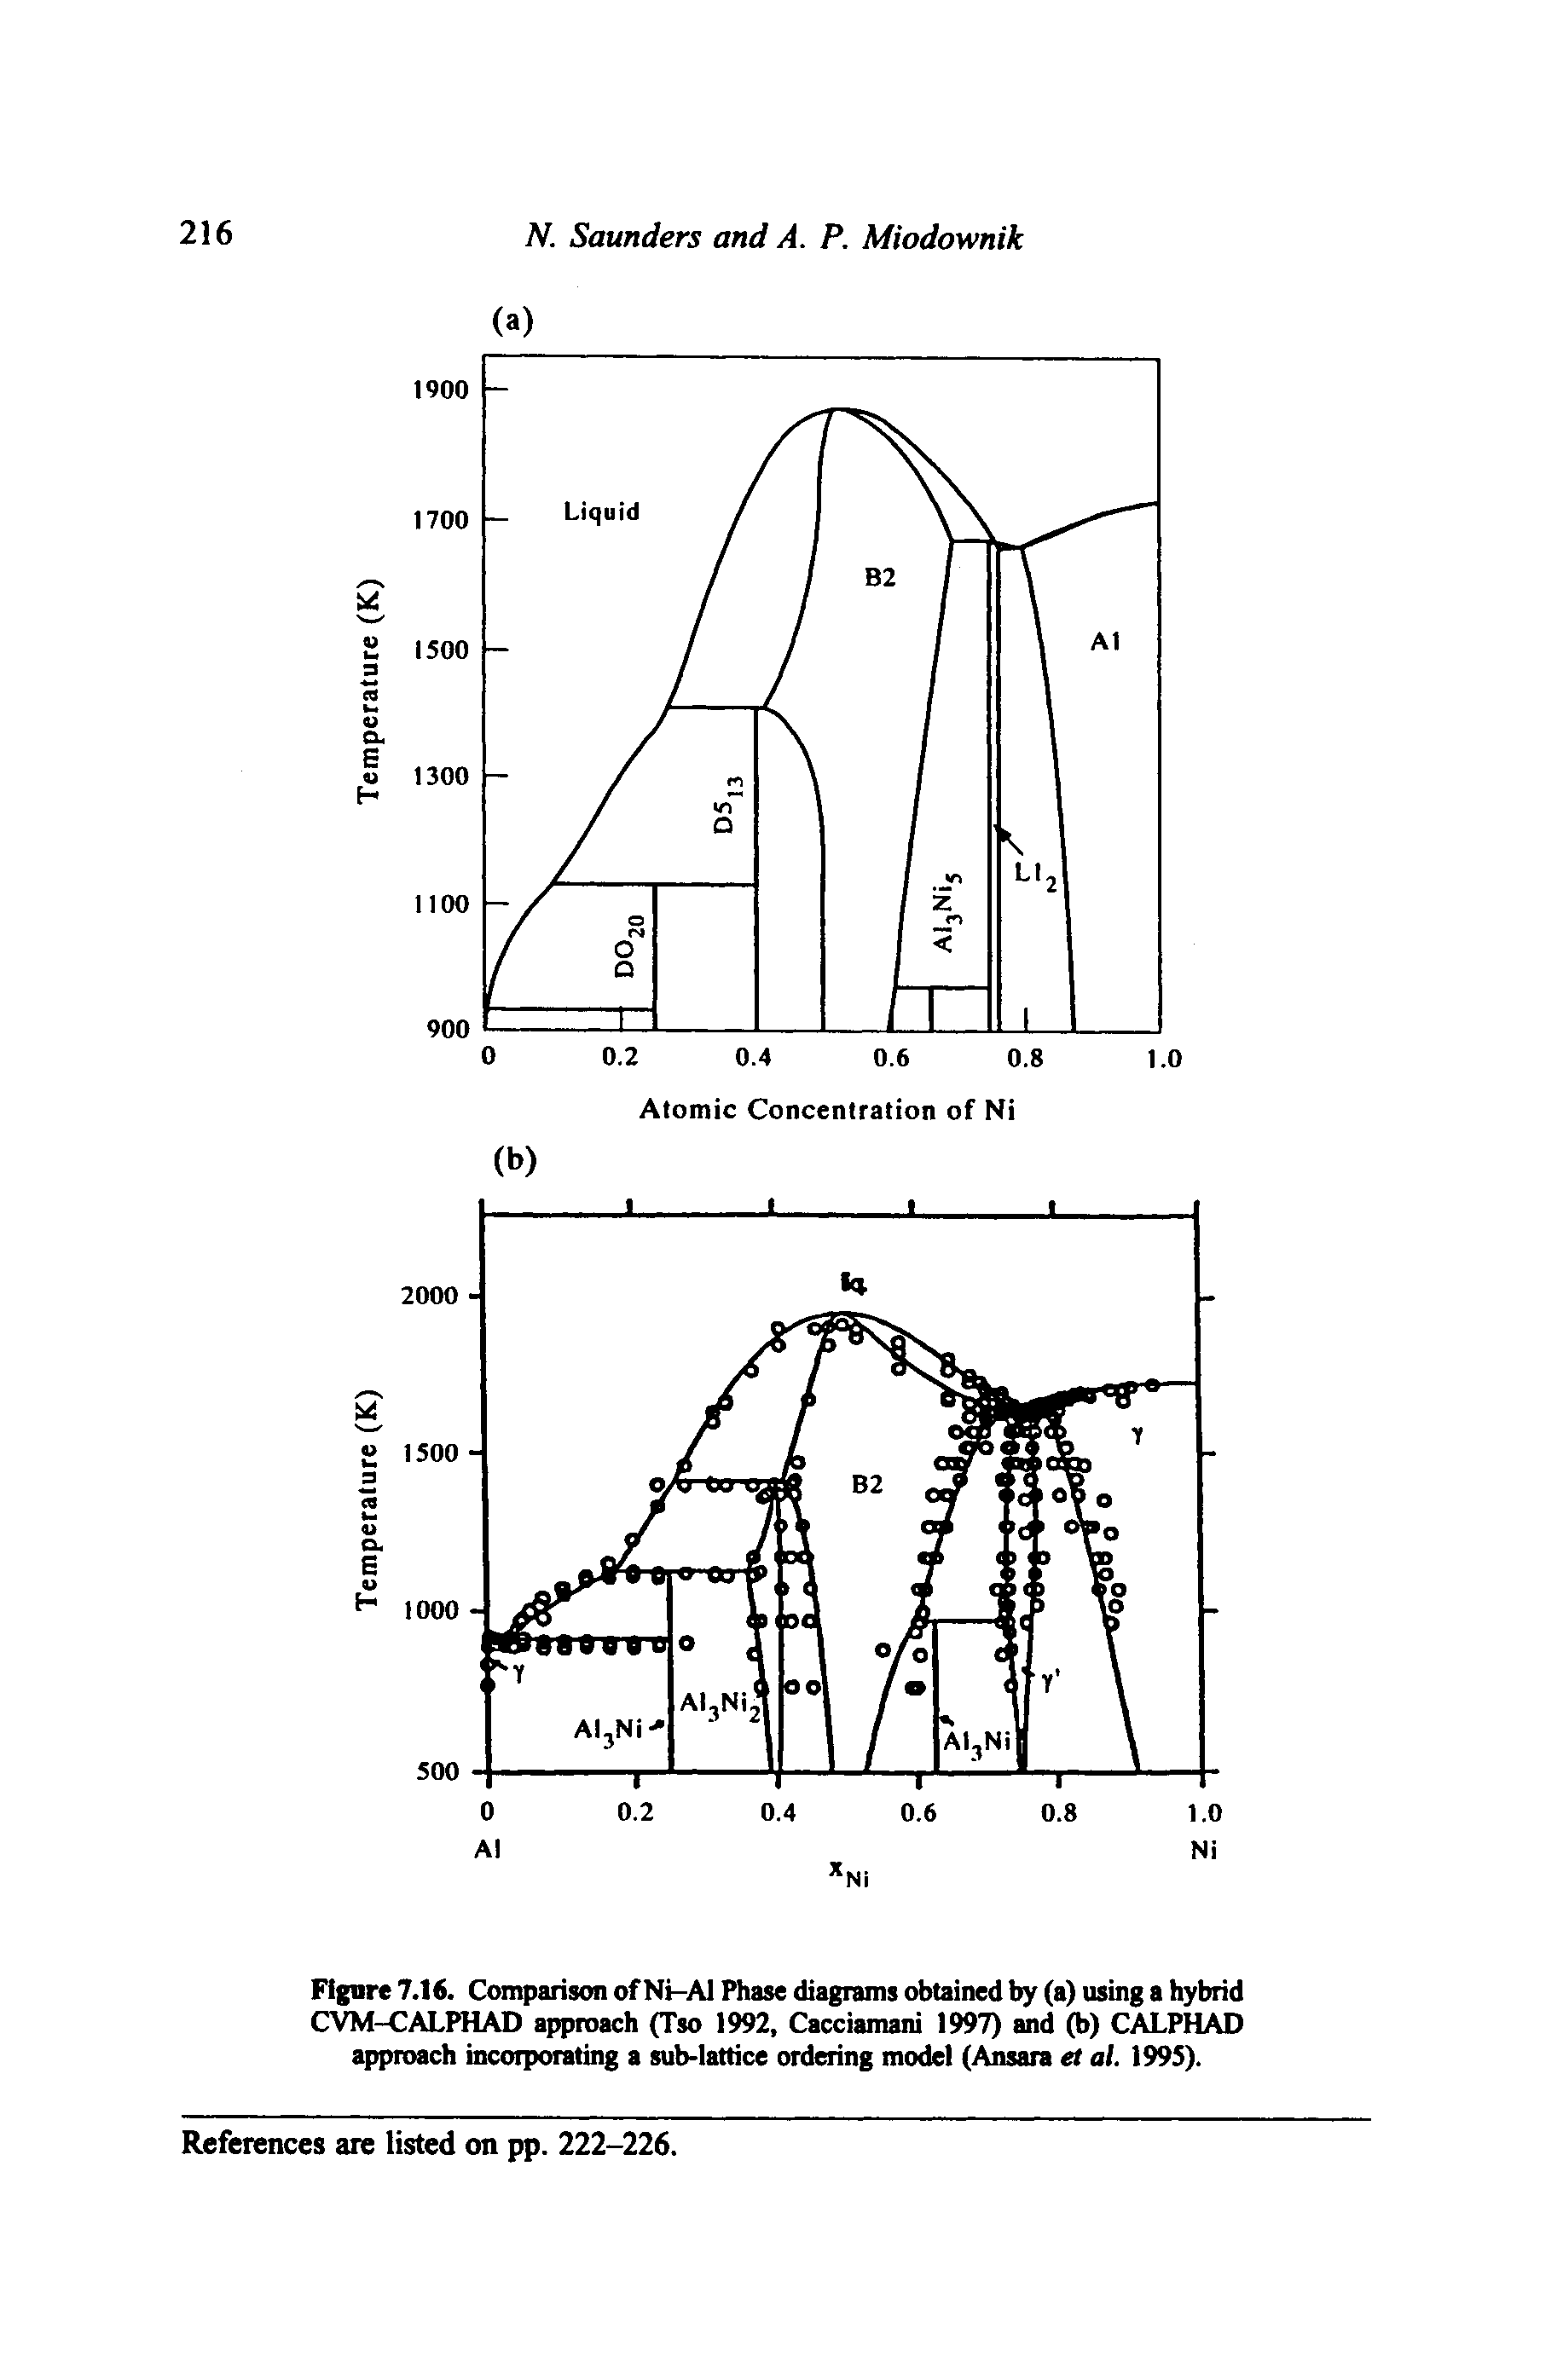 Figure 7.16. Comparison of Ni-Al Phase diagrams obtained by (a) using a hybrid CVM-CALPHAD approach (Tso 1992, Cacciamani 1997) and (b) CALPHAD approach incorporating a sub-lattice ordering model (Ansaia et al. 1995).